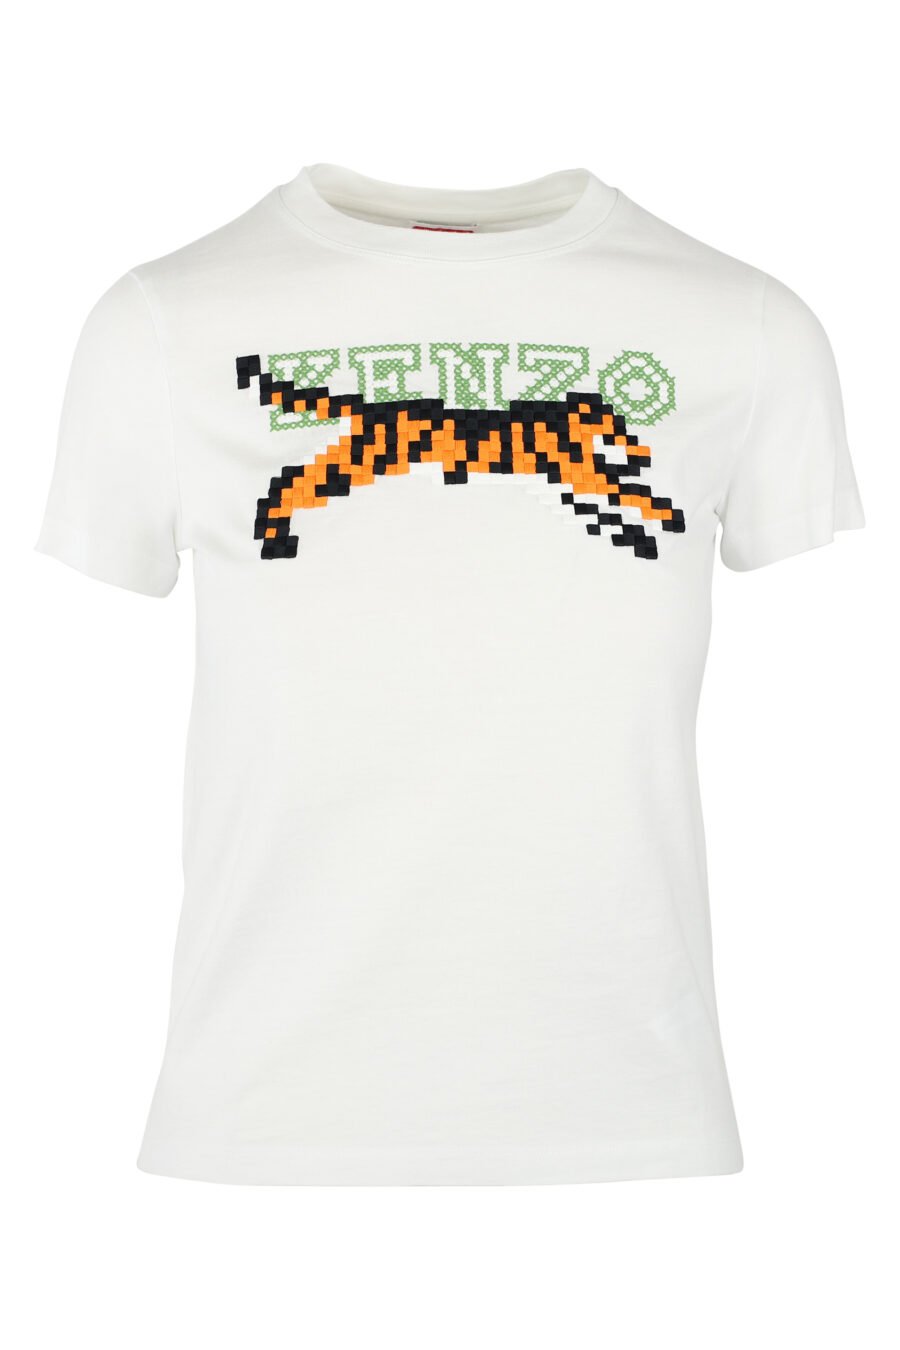 Camiseta blanca con maxilogo tigre - IMG 9536